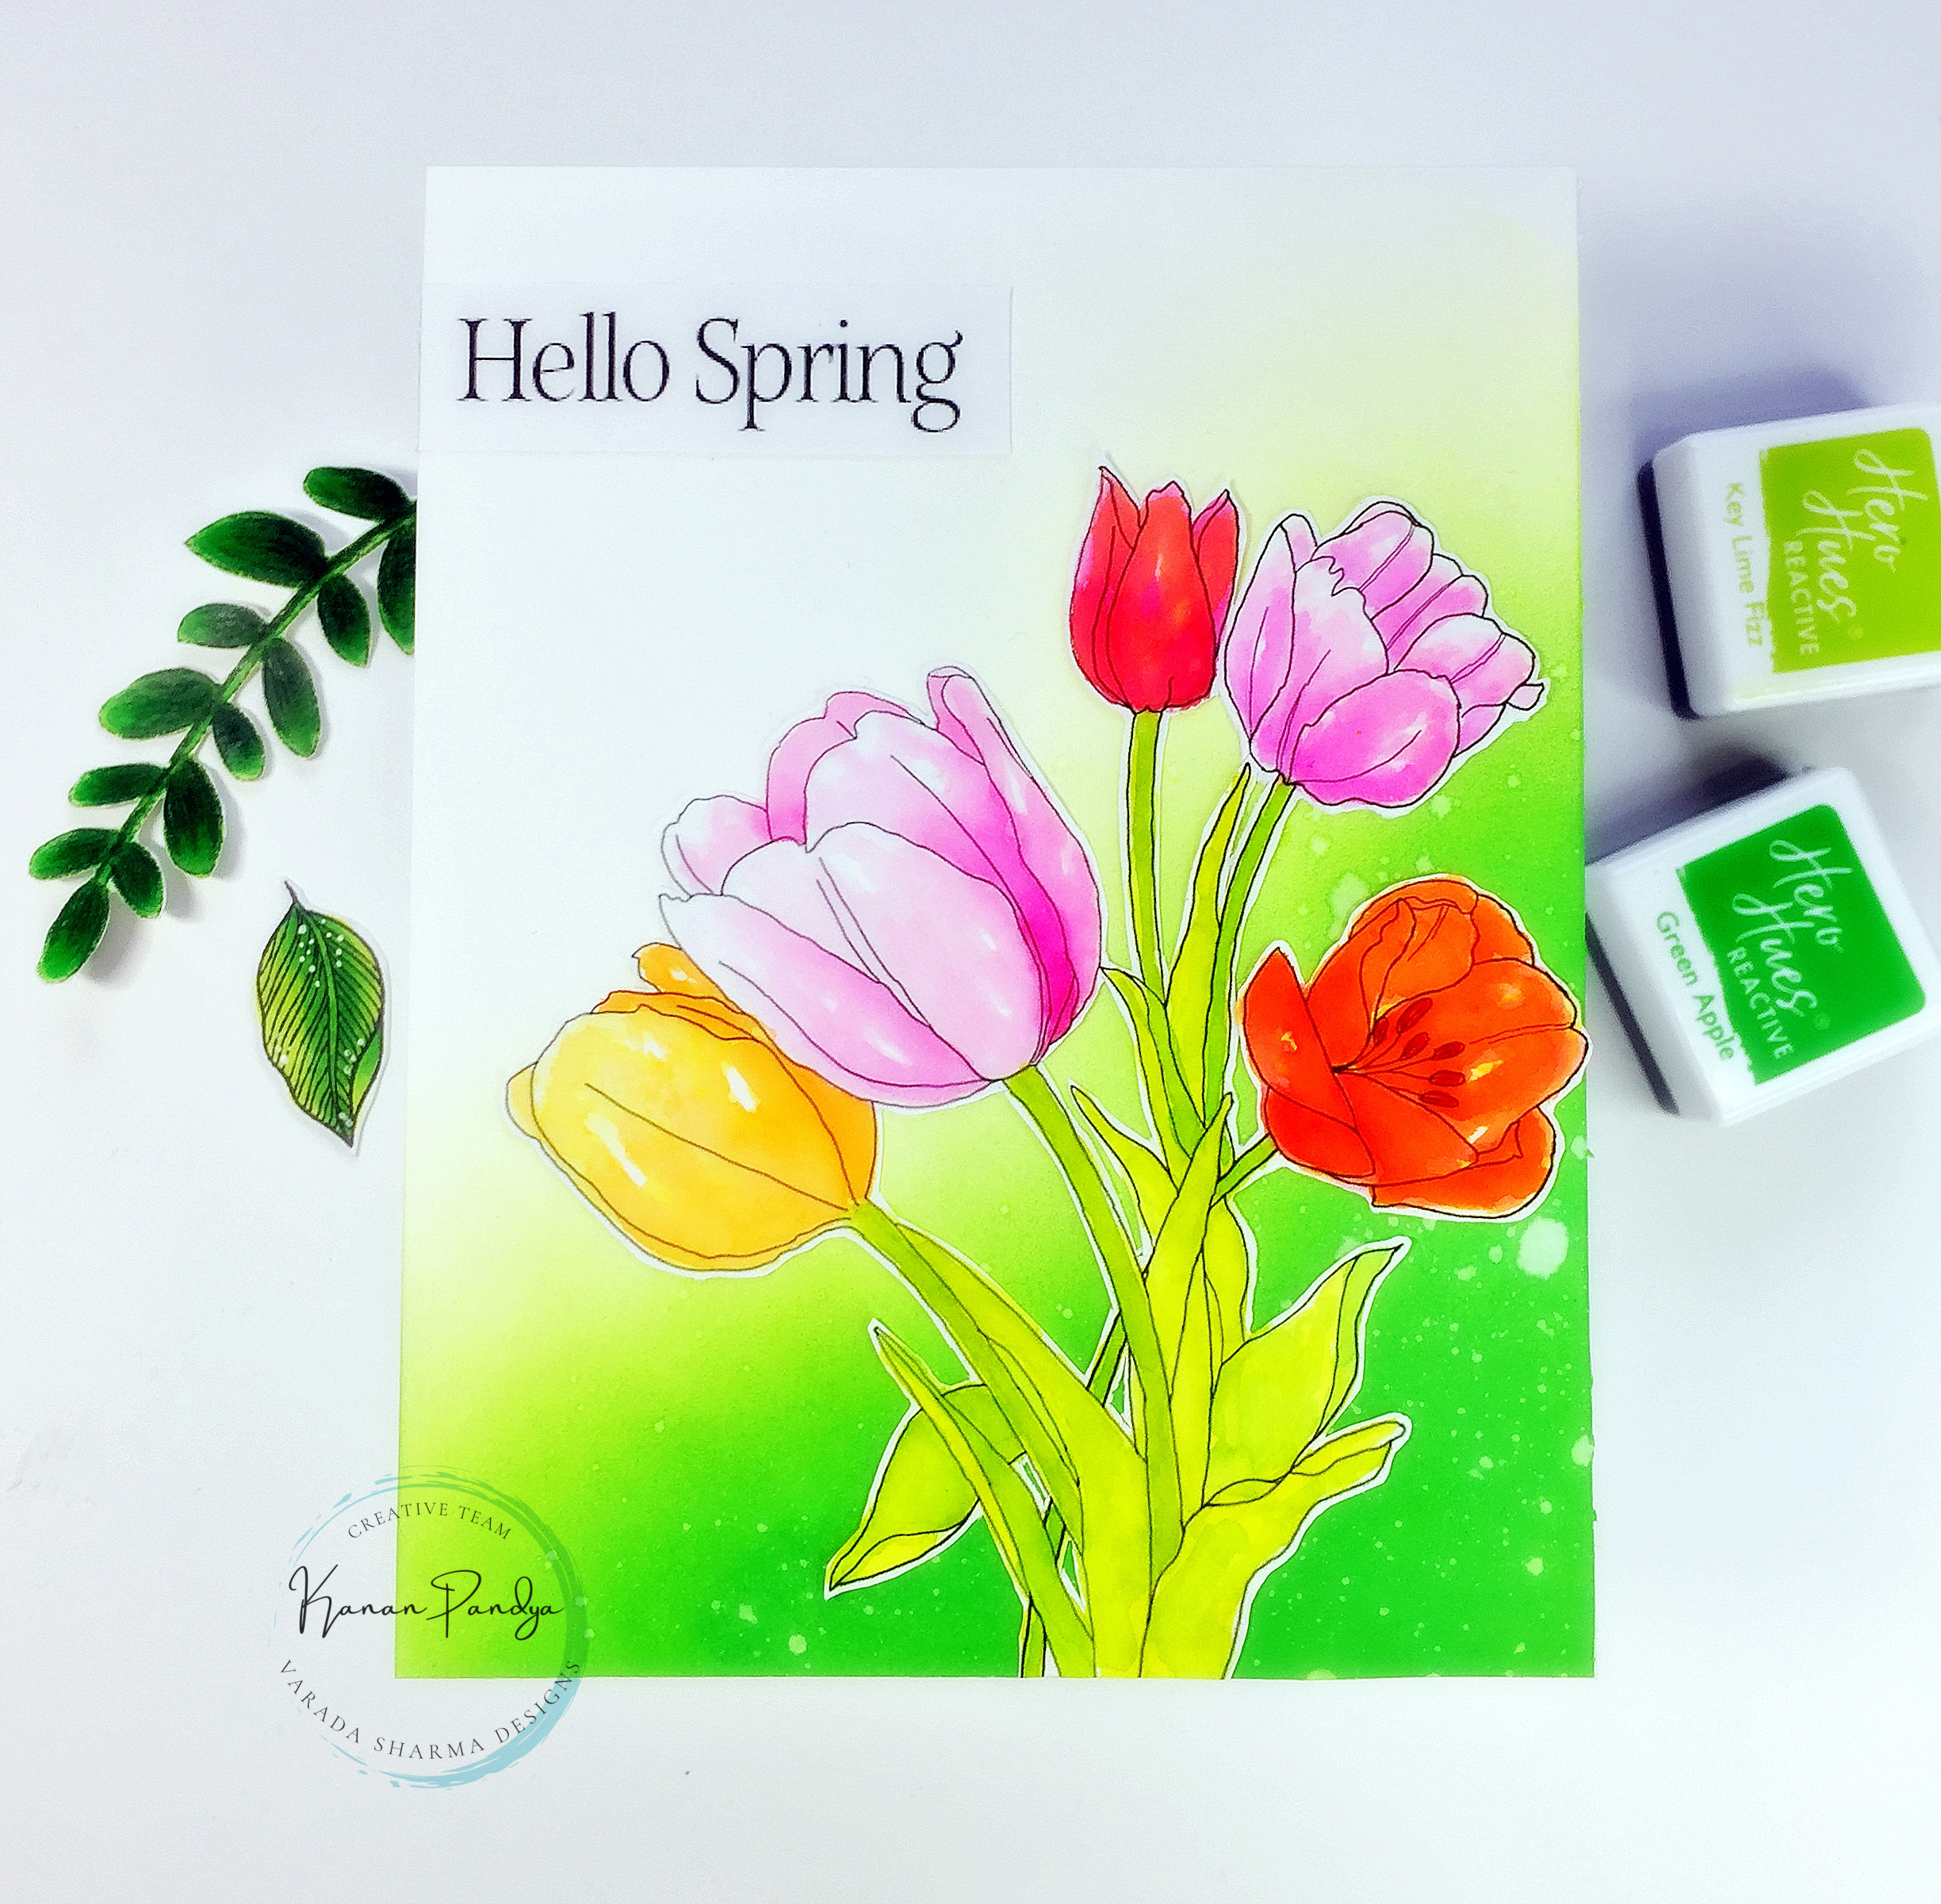 Hello Spring – Varada Sharma Designs